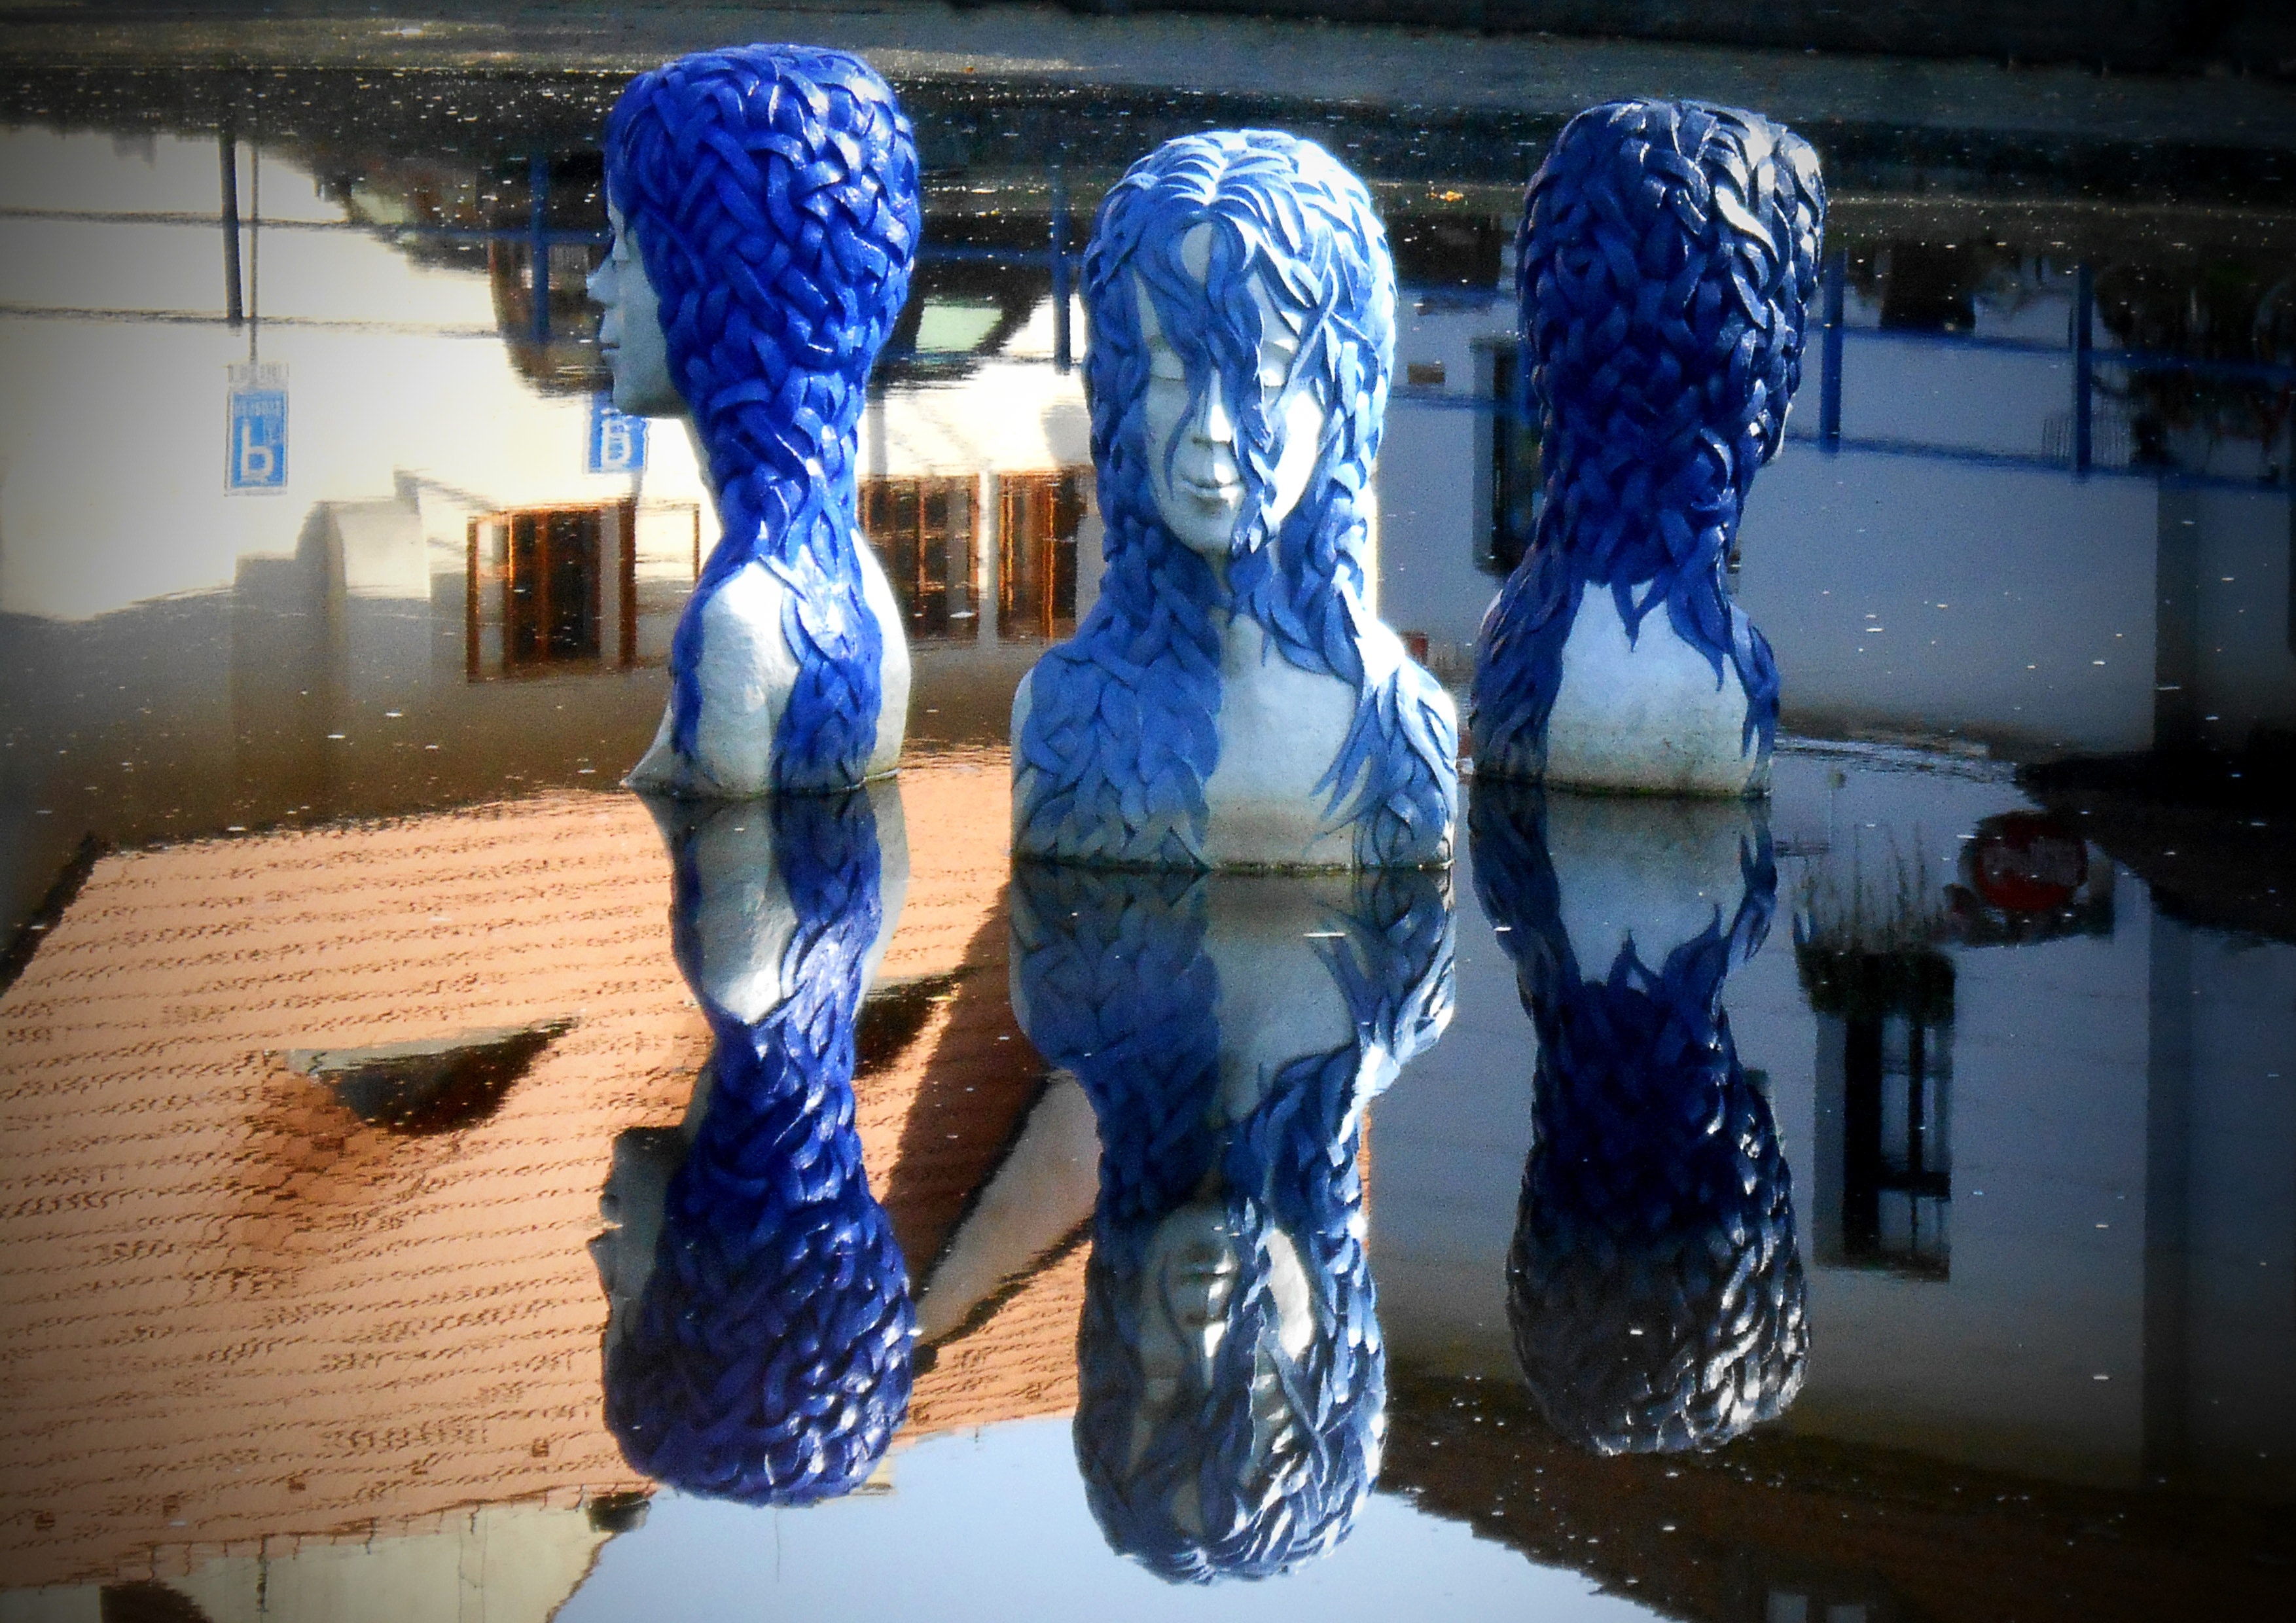 Water, Head, Hair, Blue, Reflection, reflection, human representation